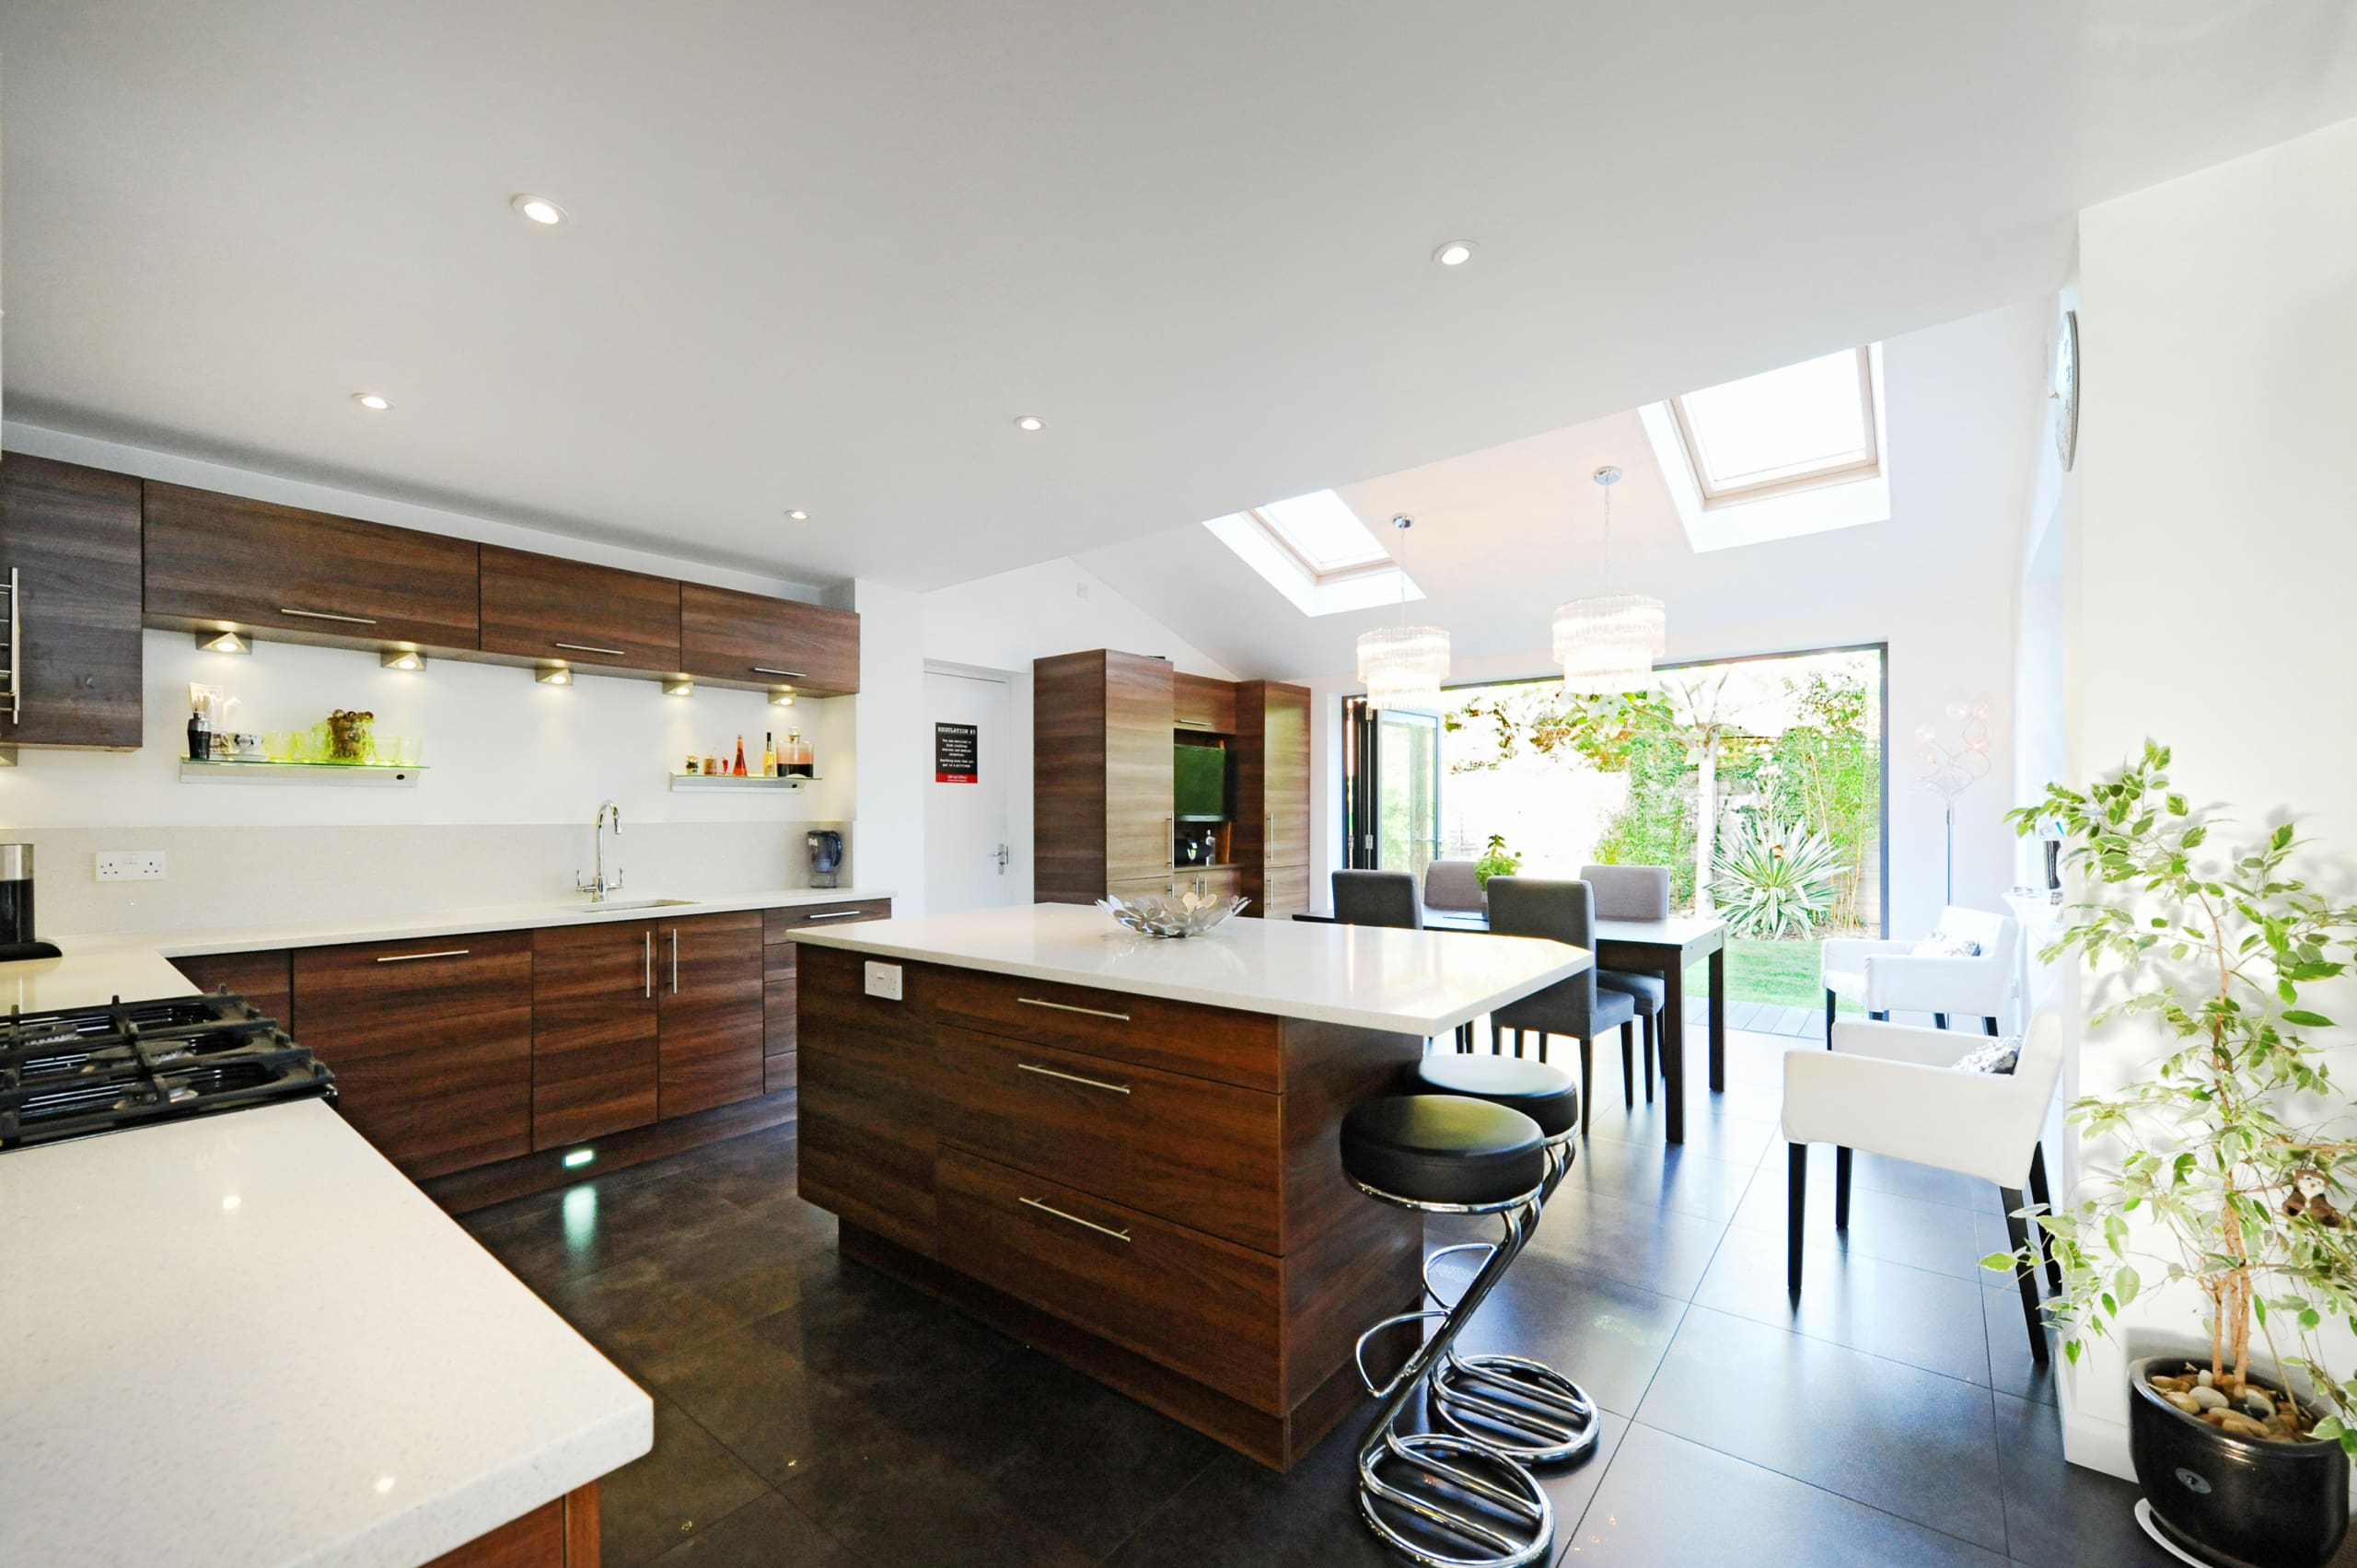 Stunning modern kitchen with bifolding doors.